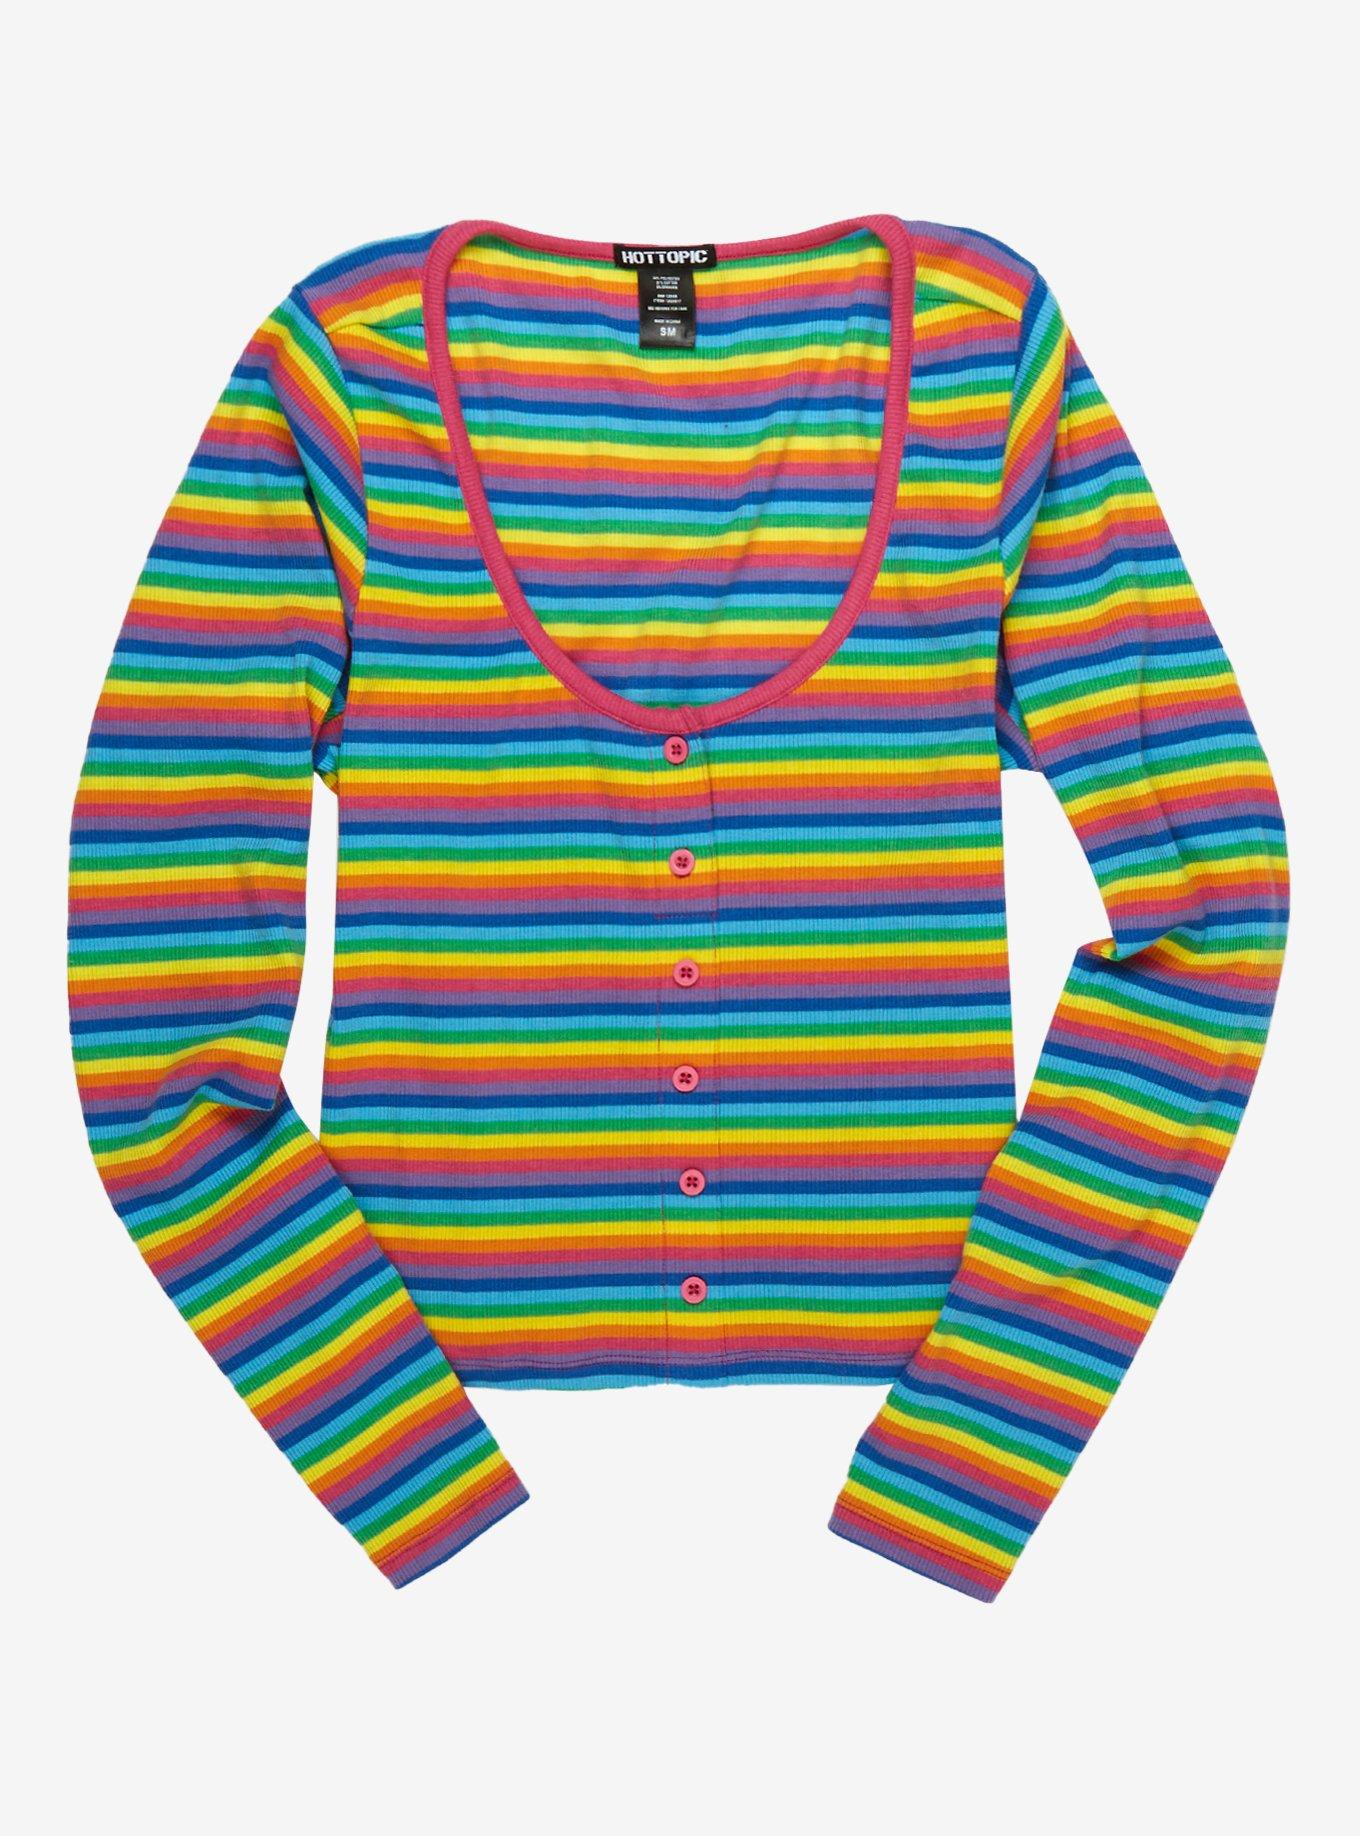 Long sleeve tee in rainbow stripe